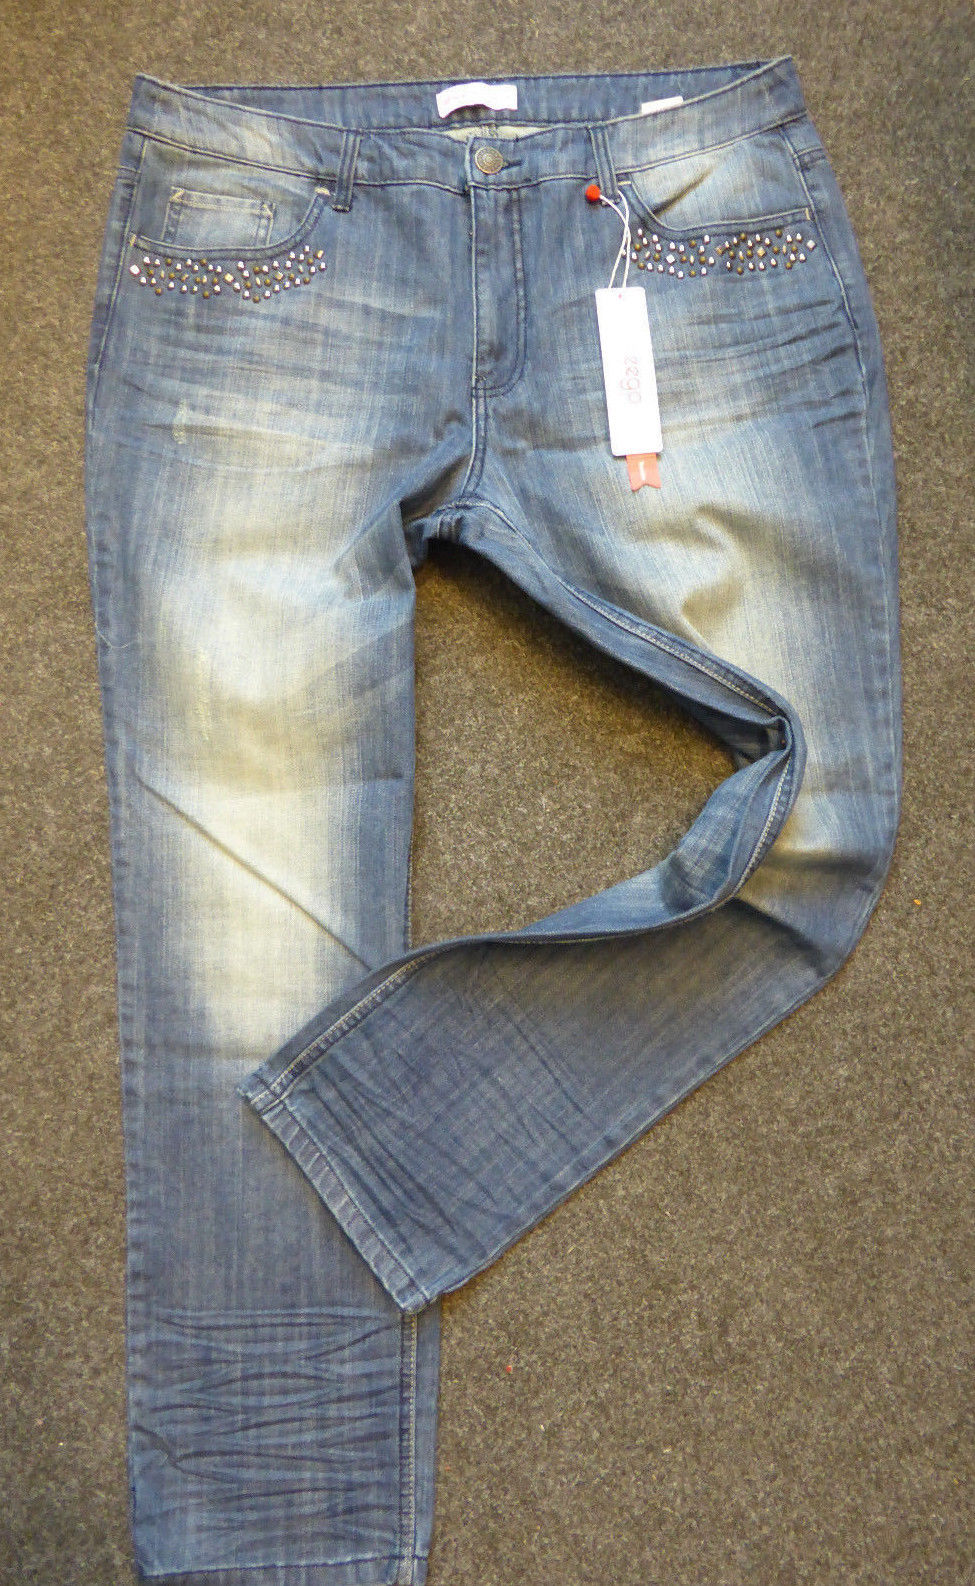 Damenmode Sheego 7 8 Hose Jeans Caprihose Gr 40 58 Dark Blue Denim Neu Kleidung Accessoires Pvcplus Co Nz